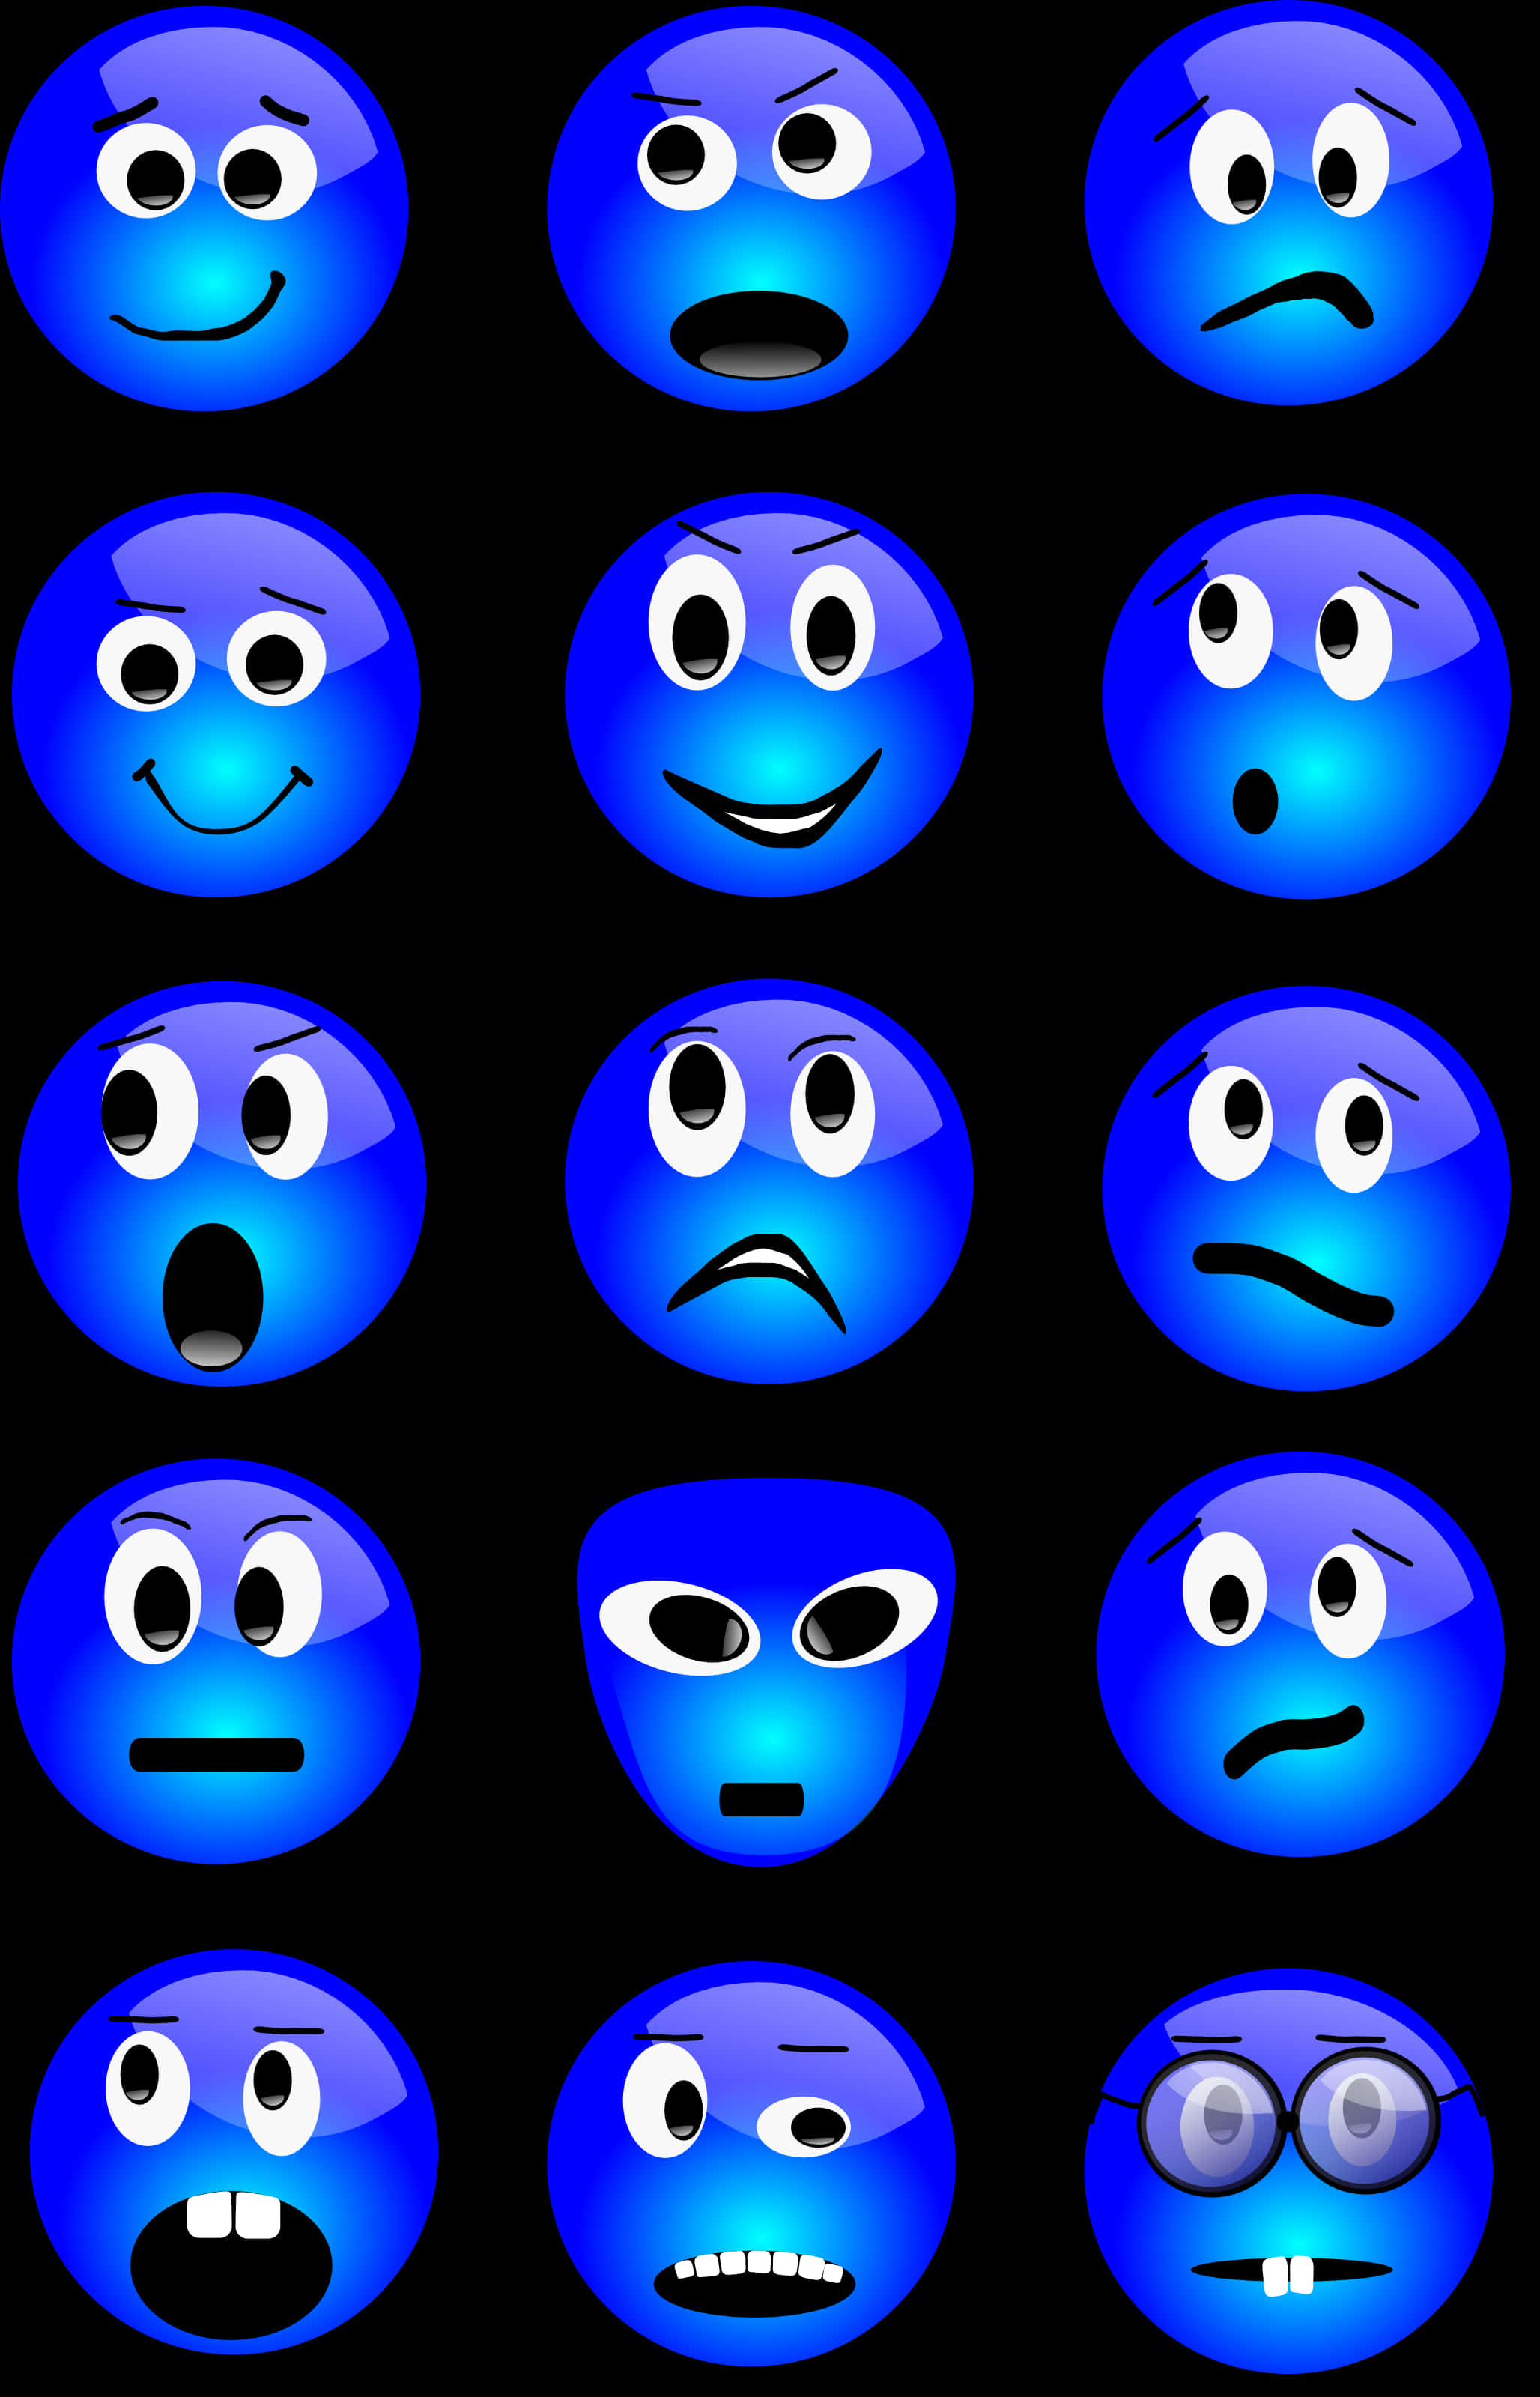 Varietyof Blue Emoji Expressions.jpg PNG image